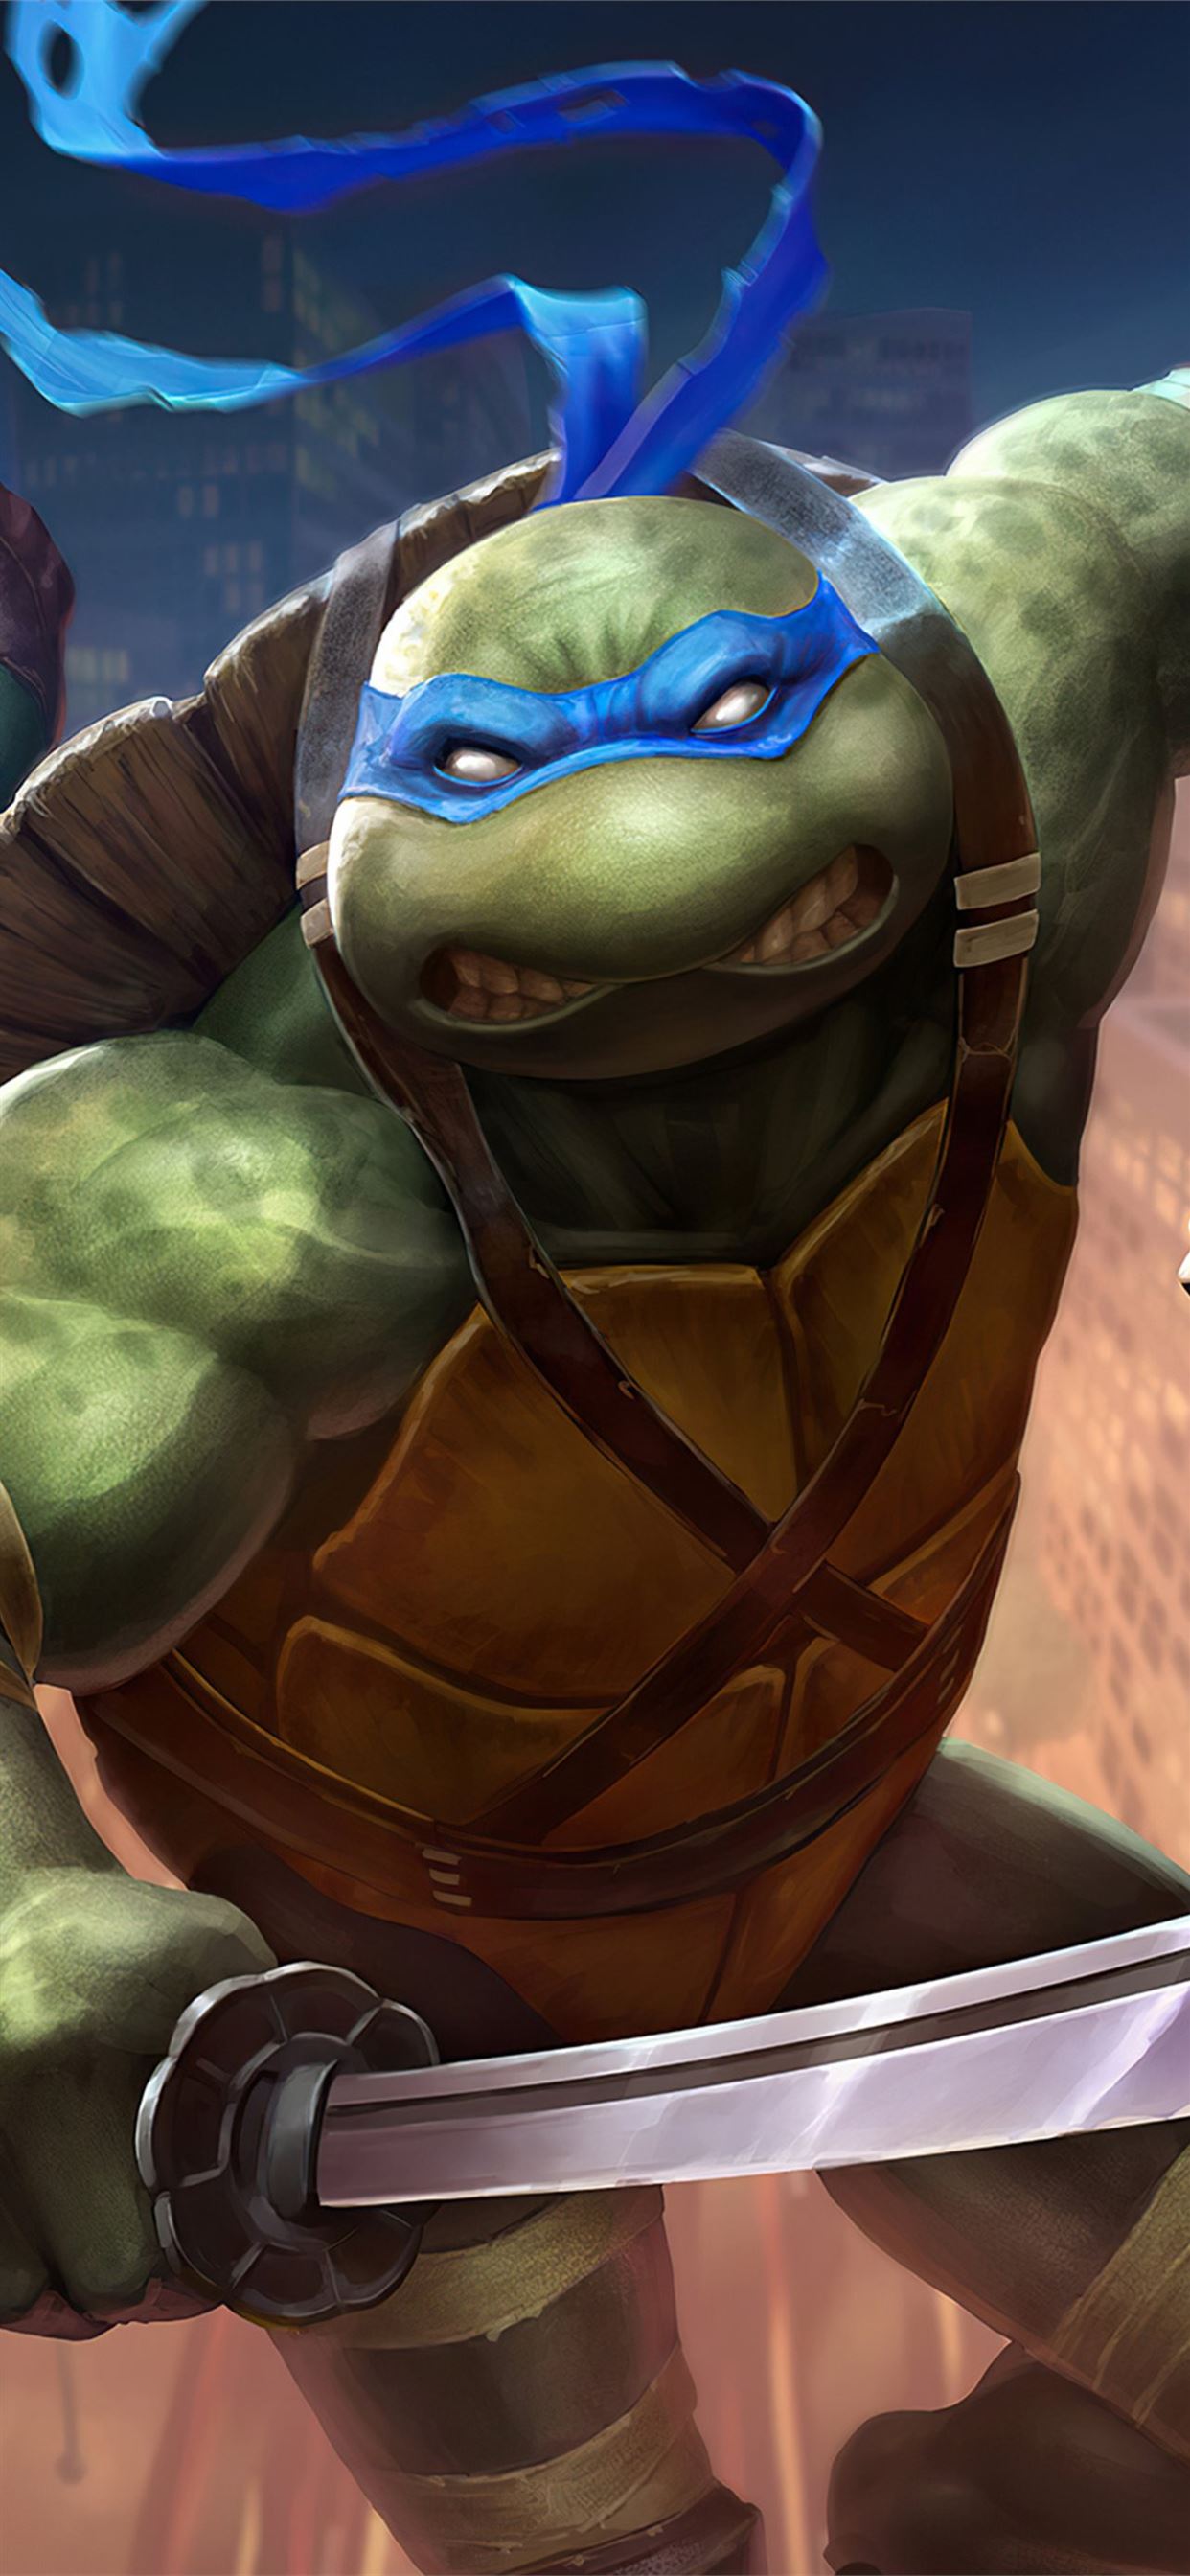 Teenage Mutant Ninja Turtles Iphone X Wallpapers Free Download